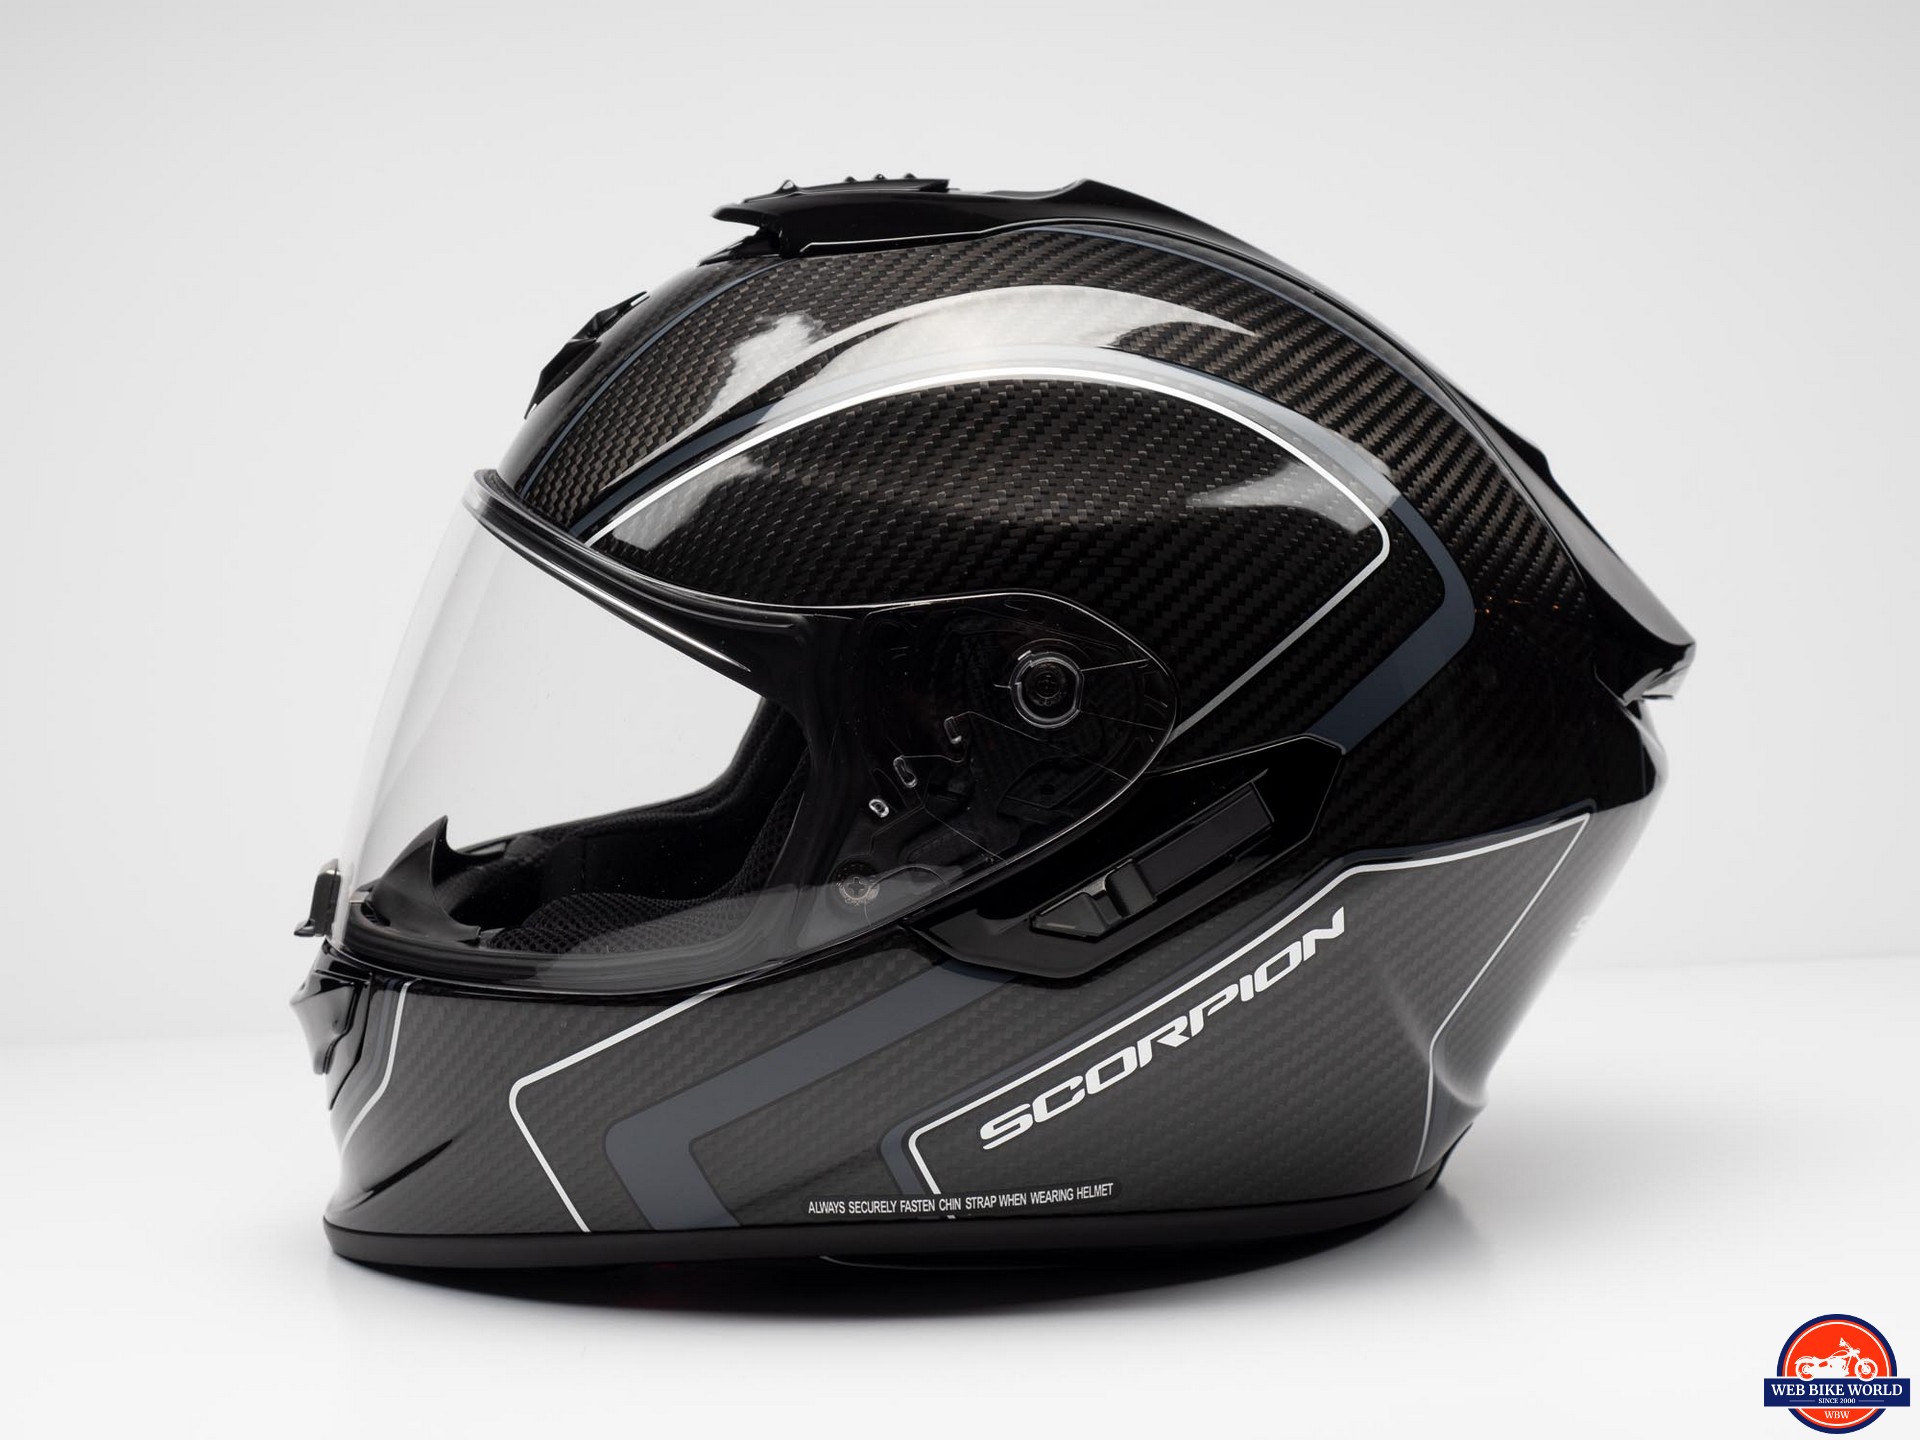 The Scorpion EXO-ST1400 carbon helmet.